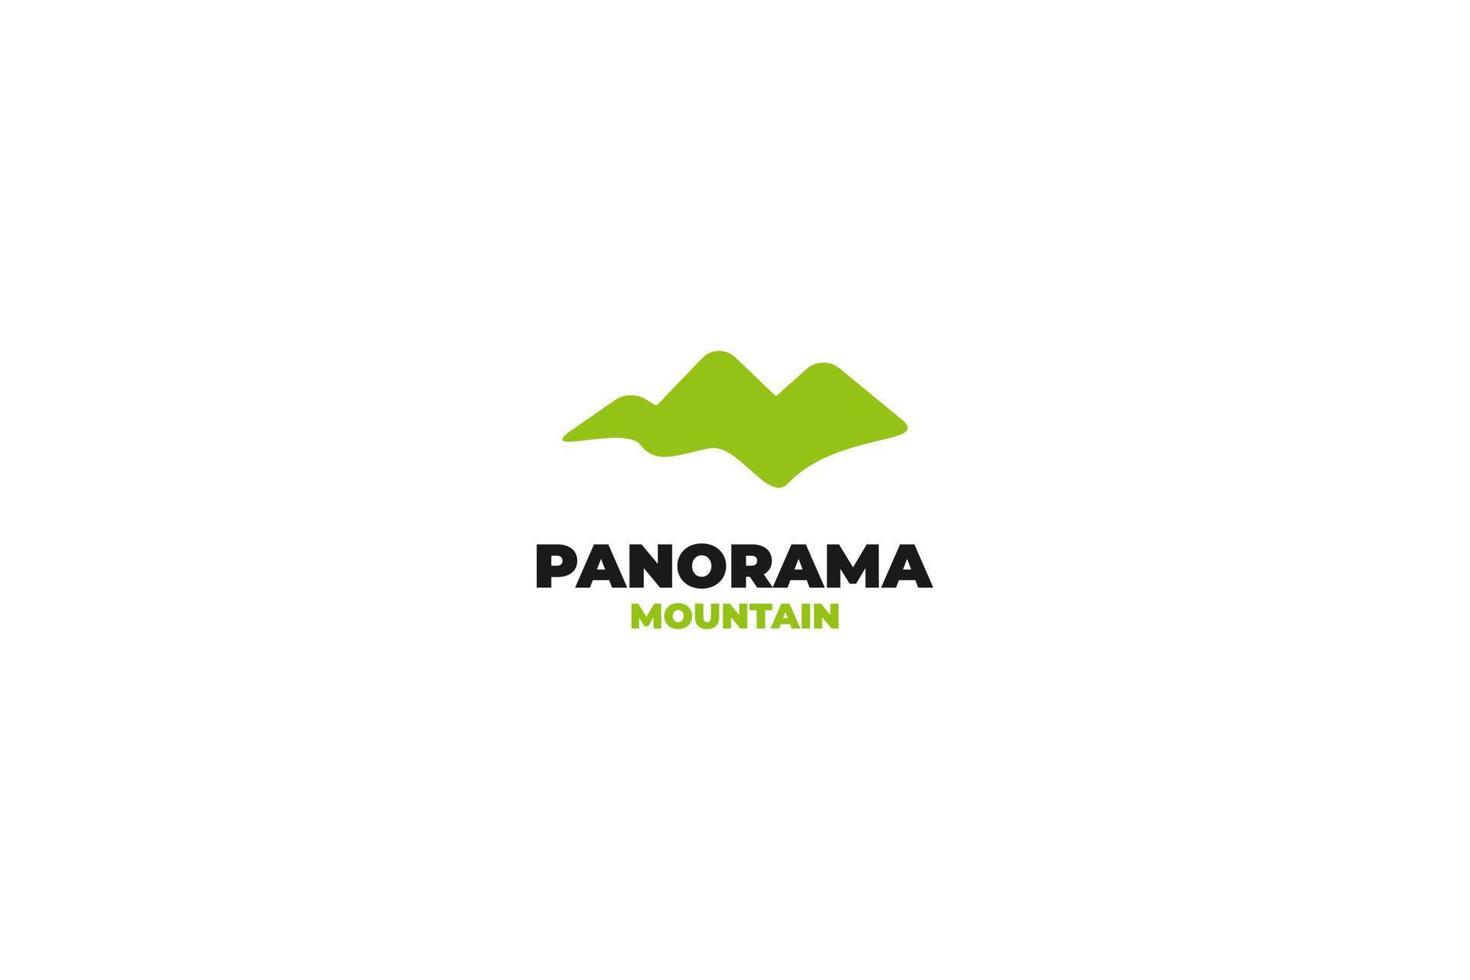 Landscape hills mountain peaks logo design vector illustration